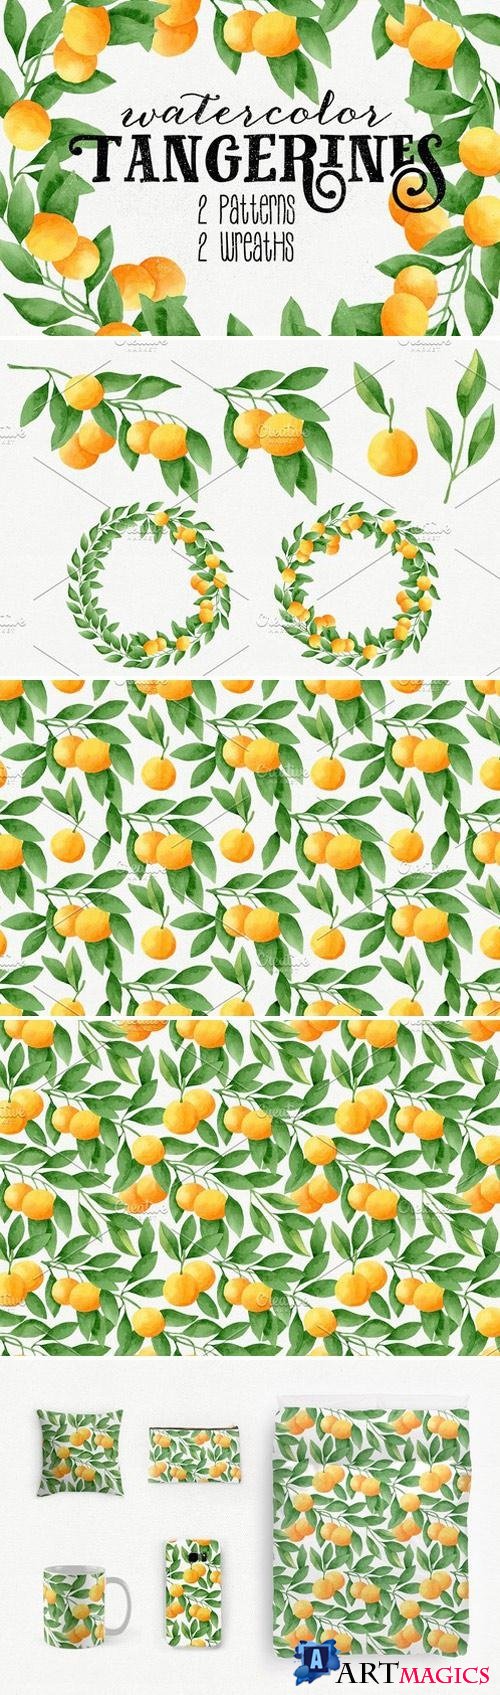 Watercolor Tangerines + Patterns 1492110